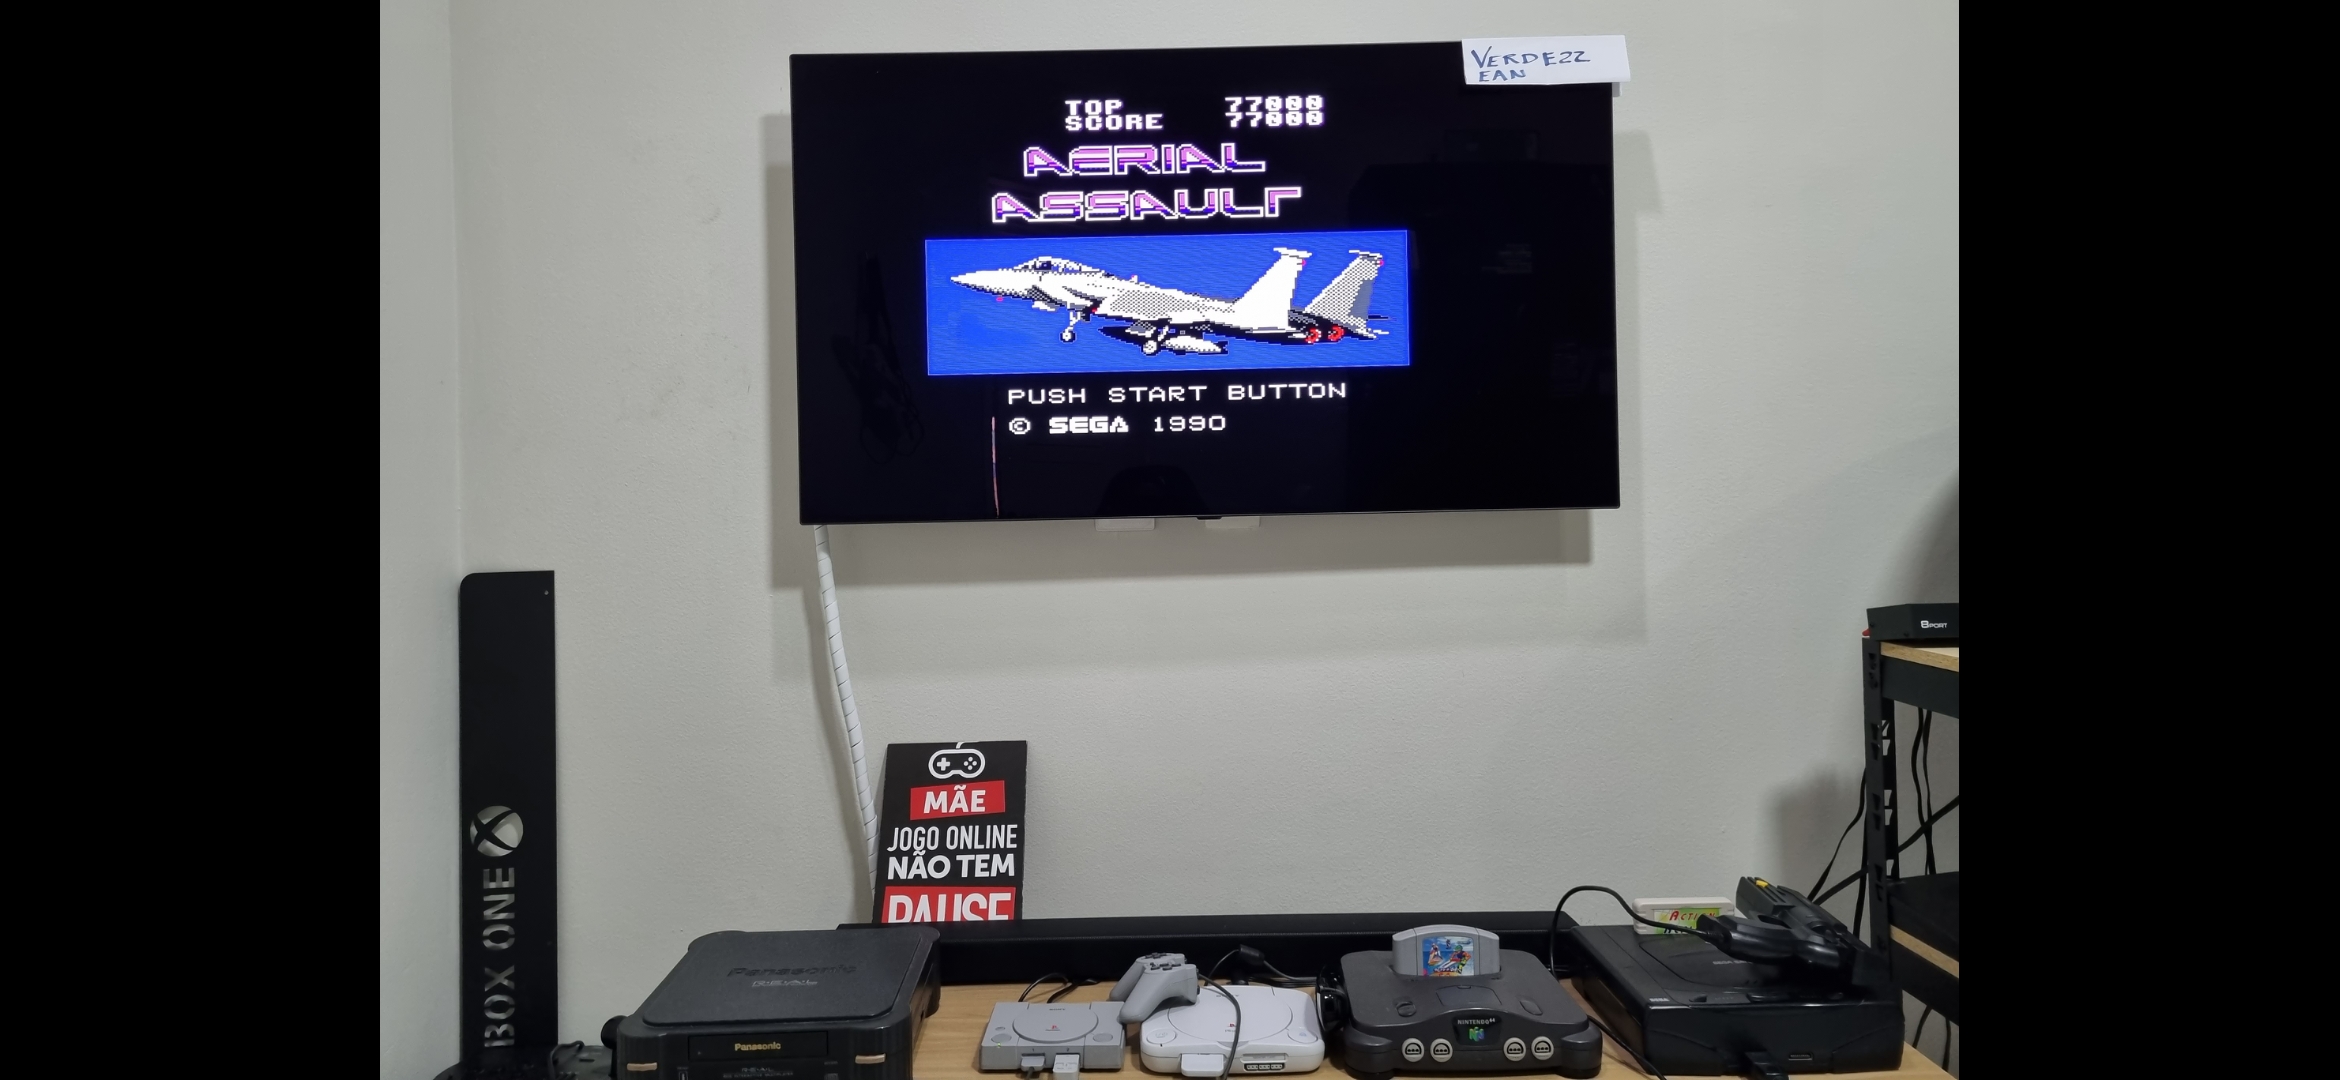 Verde22: Aerial Assault [Easy] (Sega Master System Emulated) 77,000 points on 2022-07-31 10:01:59